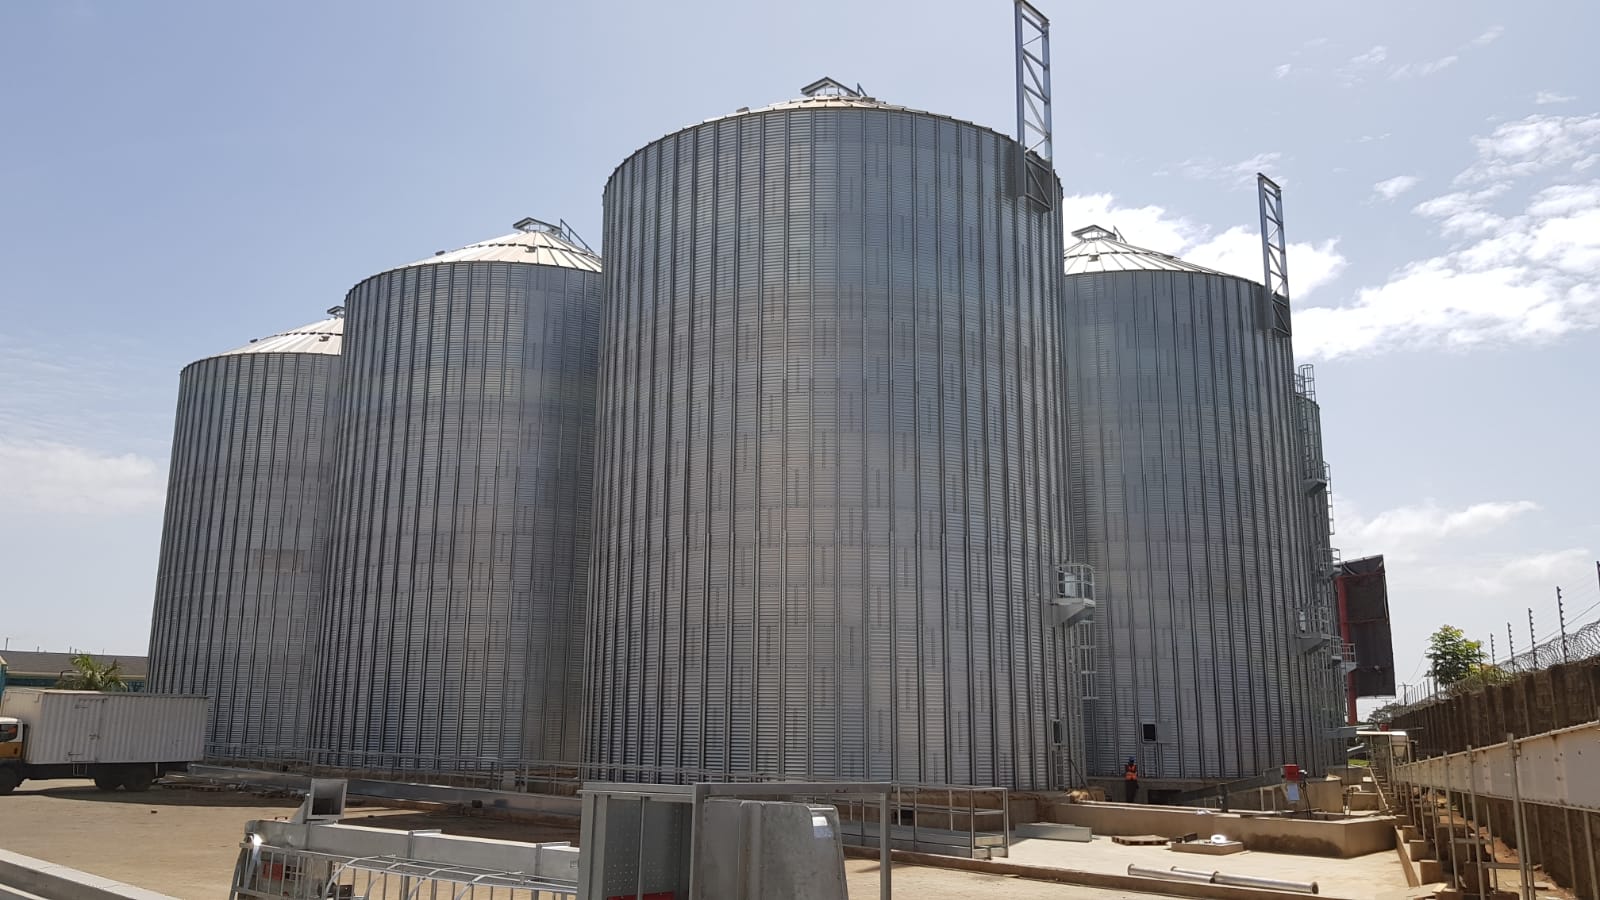 4 Flat bottom silos in Tika (Kenya)